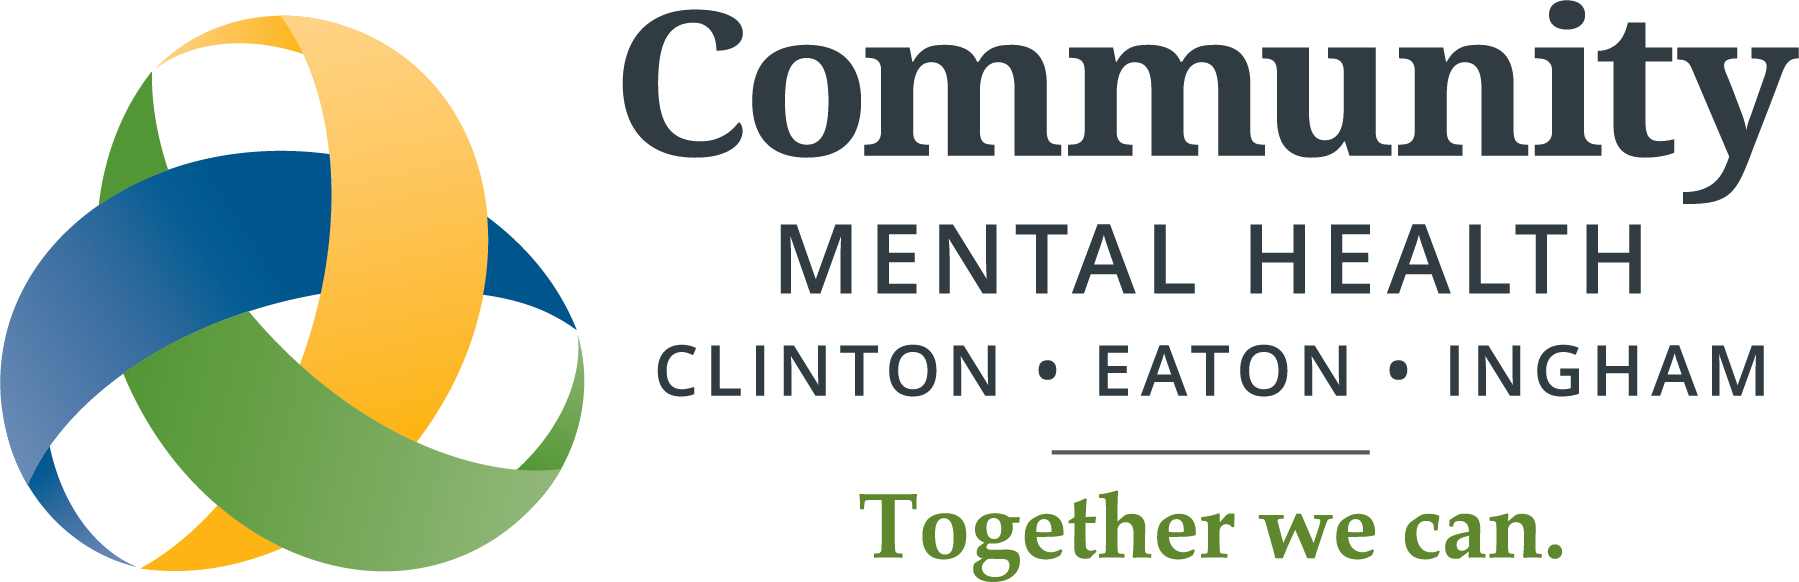 Community Mental Health Clinton Eaton Ingham